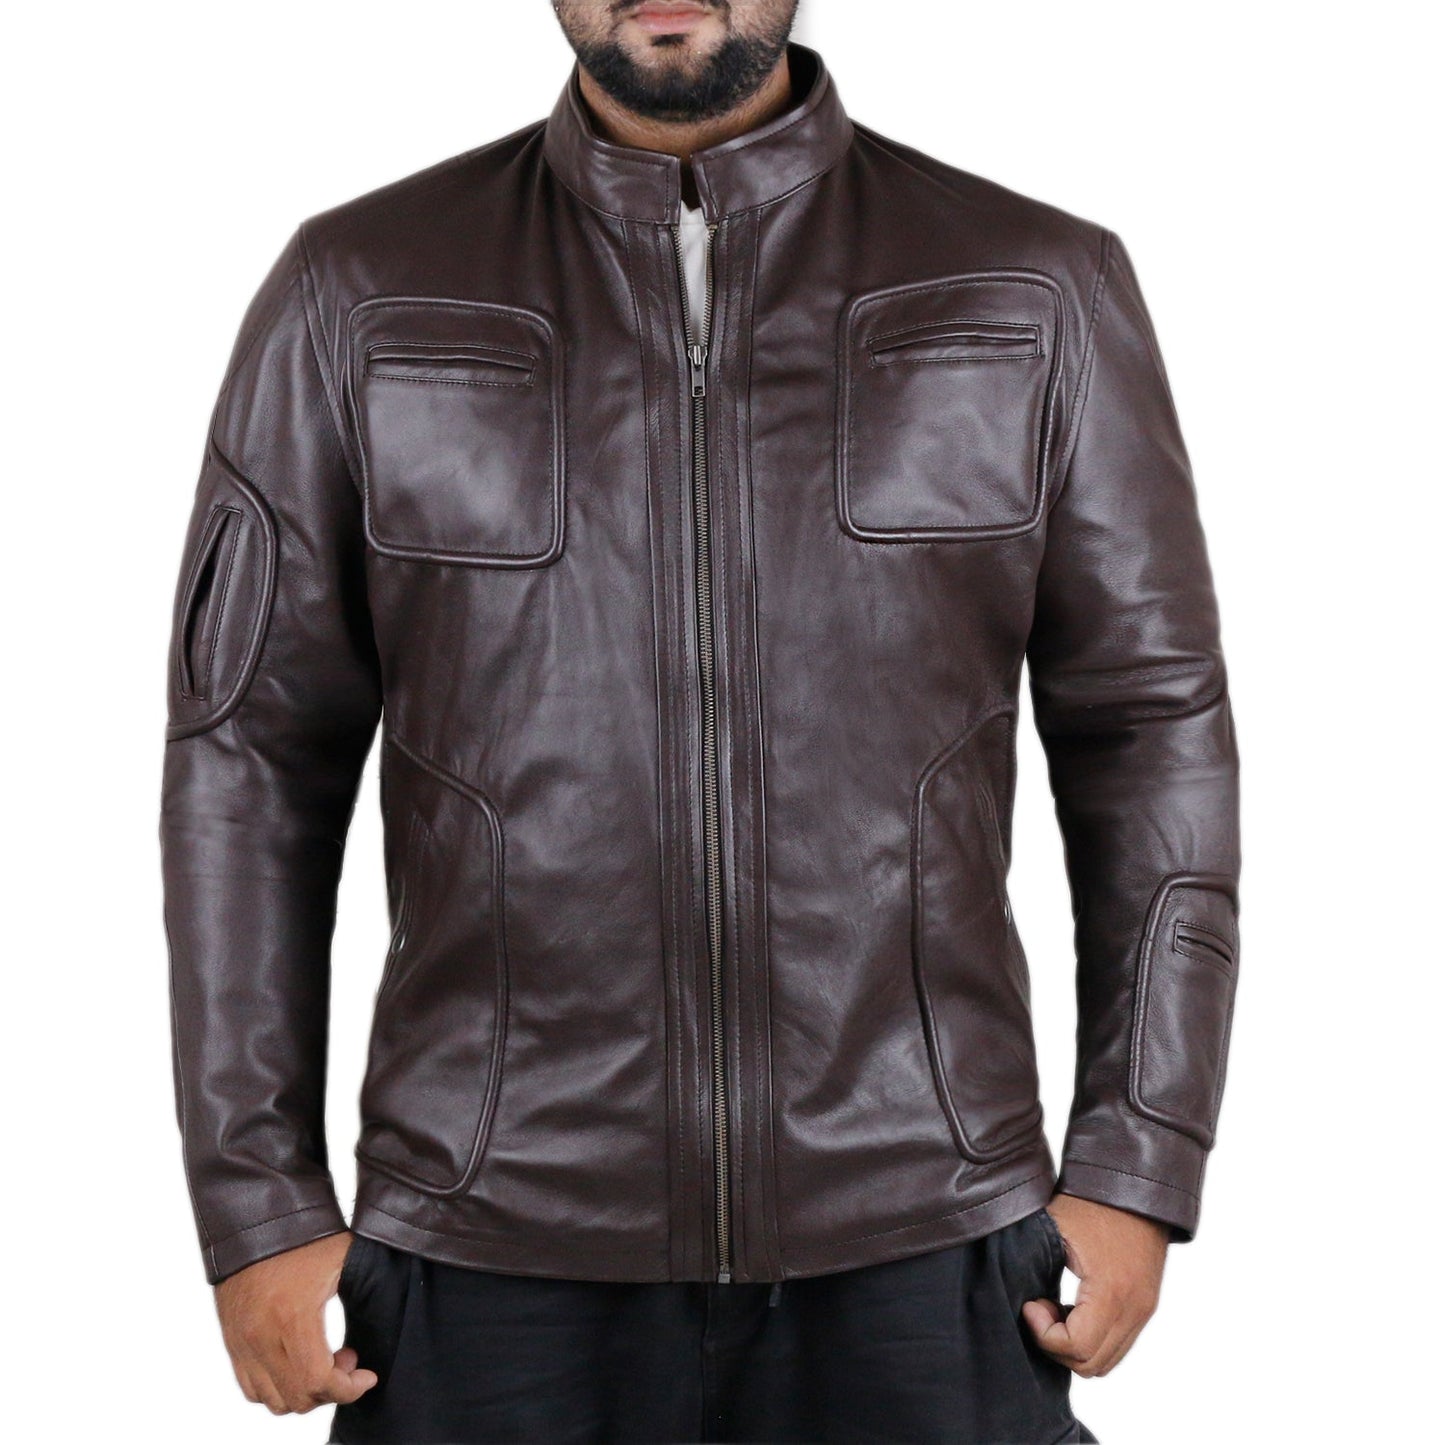 Leather Jackets Hub Mens Genuine Lambskin Leather Jacket (Black, Fencing Jacket) - 1501133